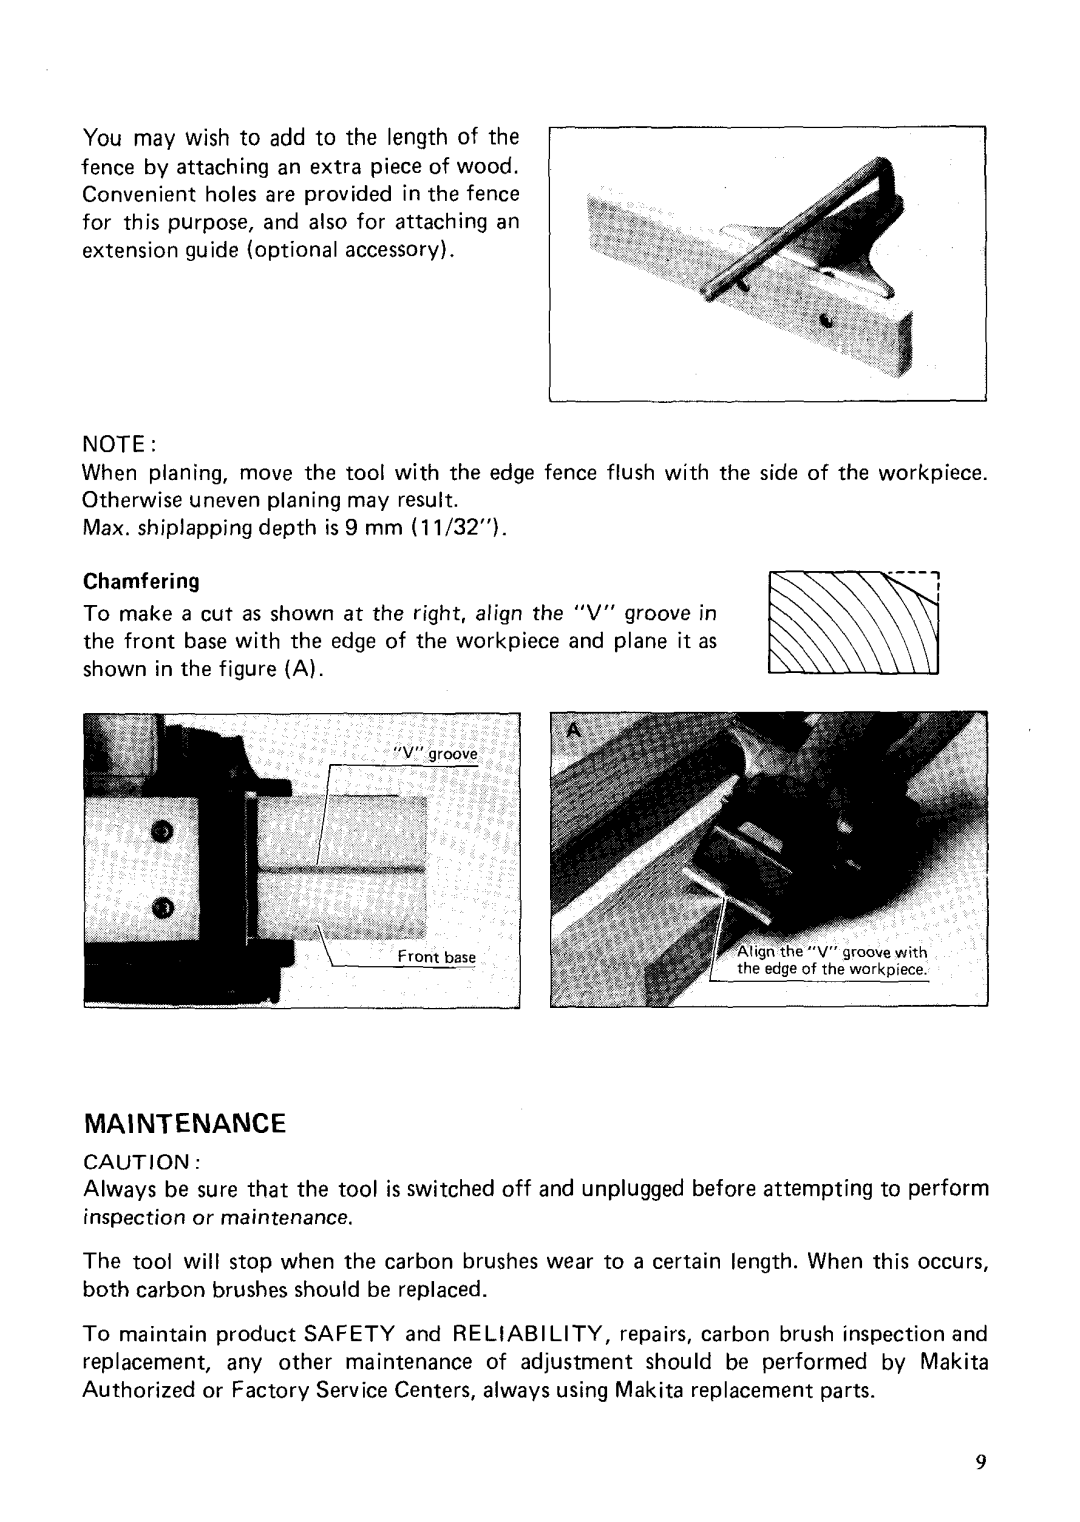 Makita M102 instruction manual MA1NTENANCE 